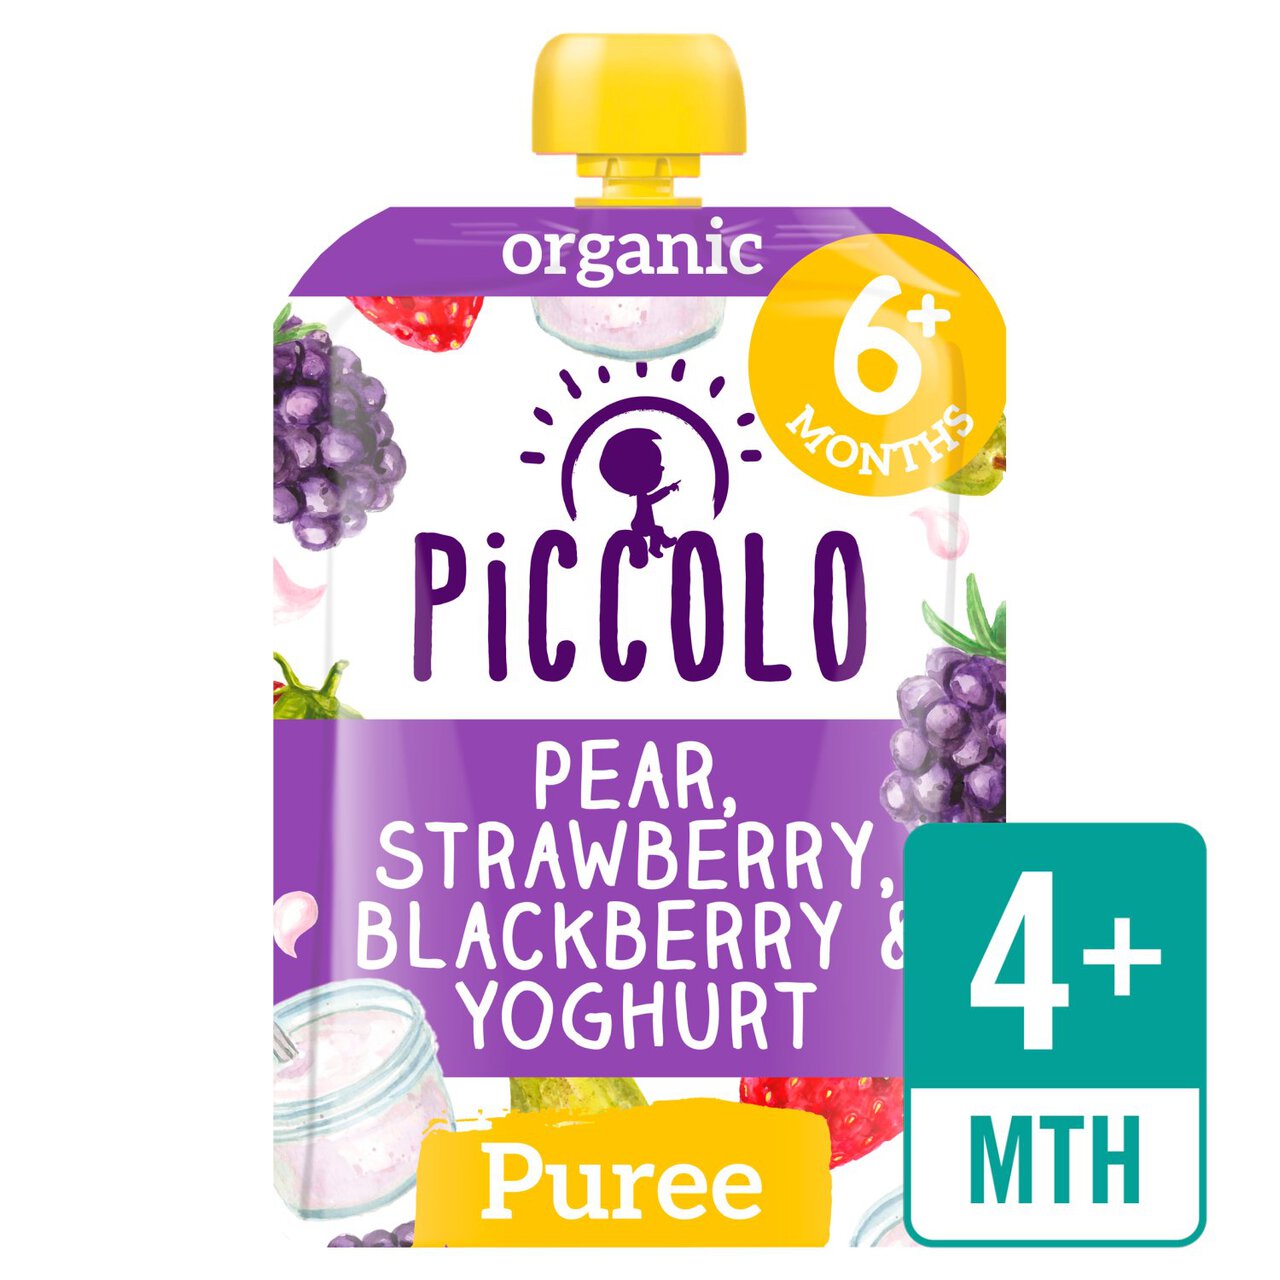 Piccolo Pear, Strawberry, Blackberry & Yoghurt Organic Baby Food Pouch 100g